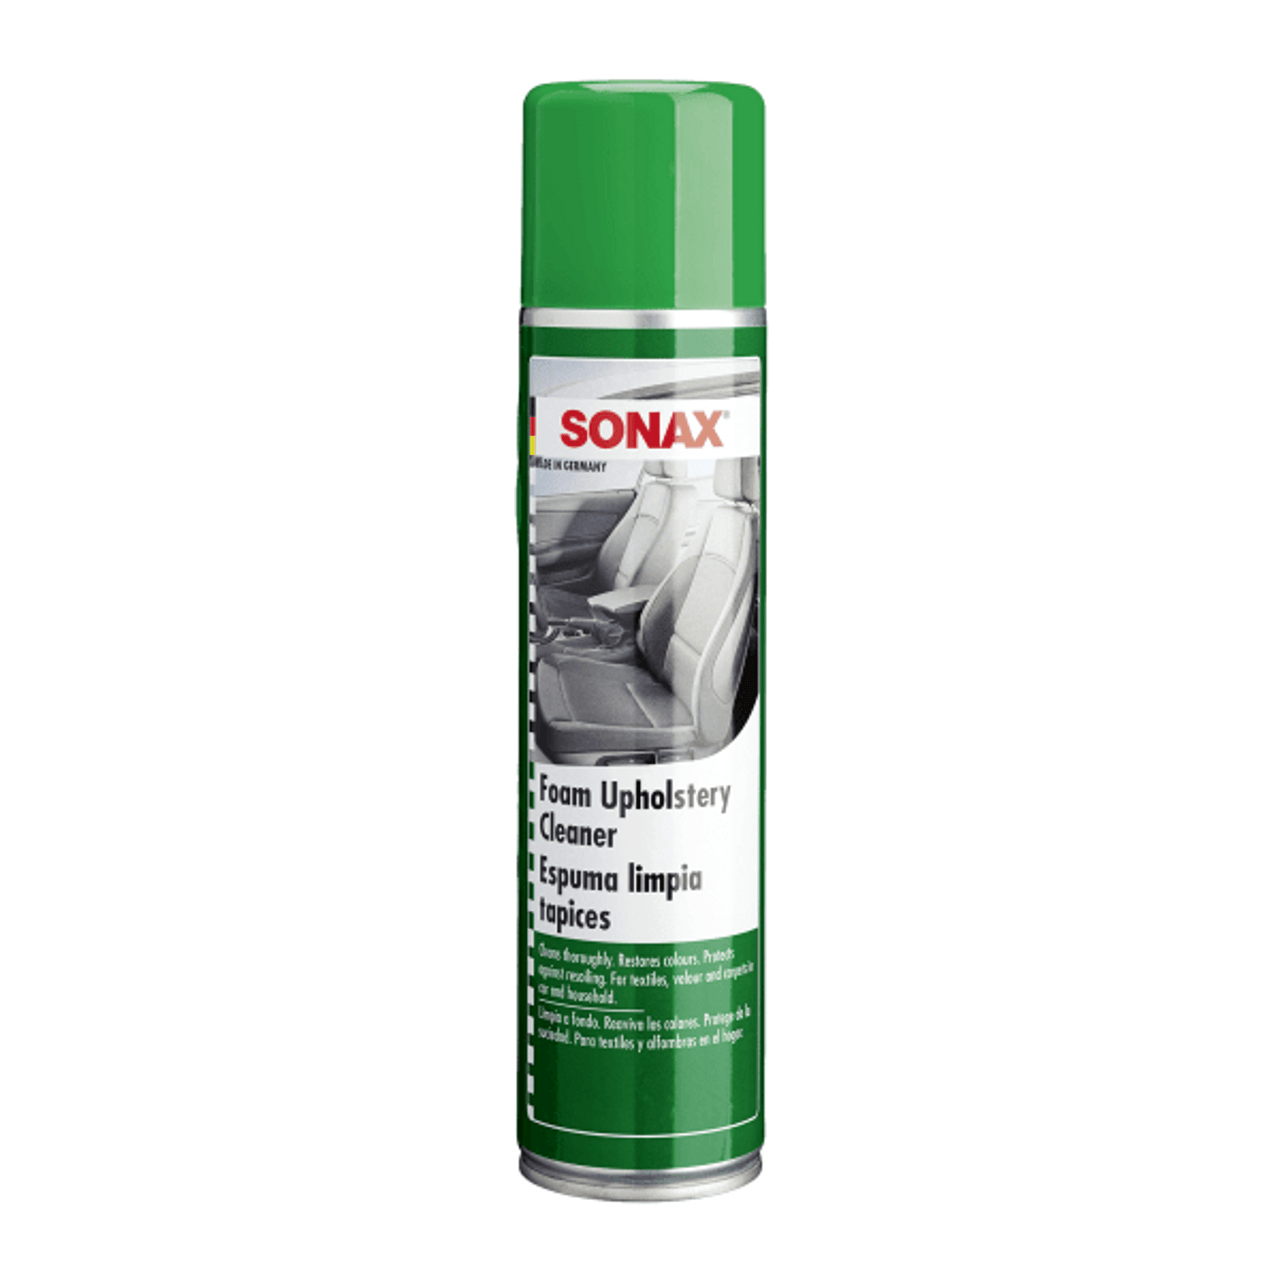 SONAX XTREME Upholstery & Alcantara Cleaner (400ml)